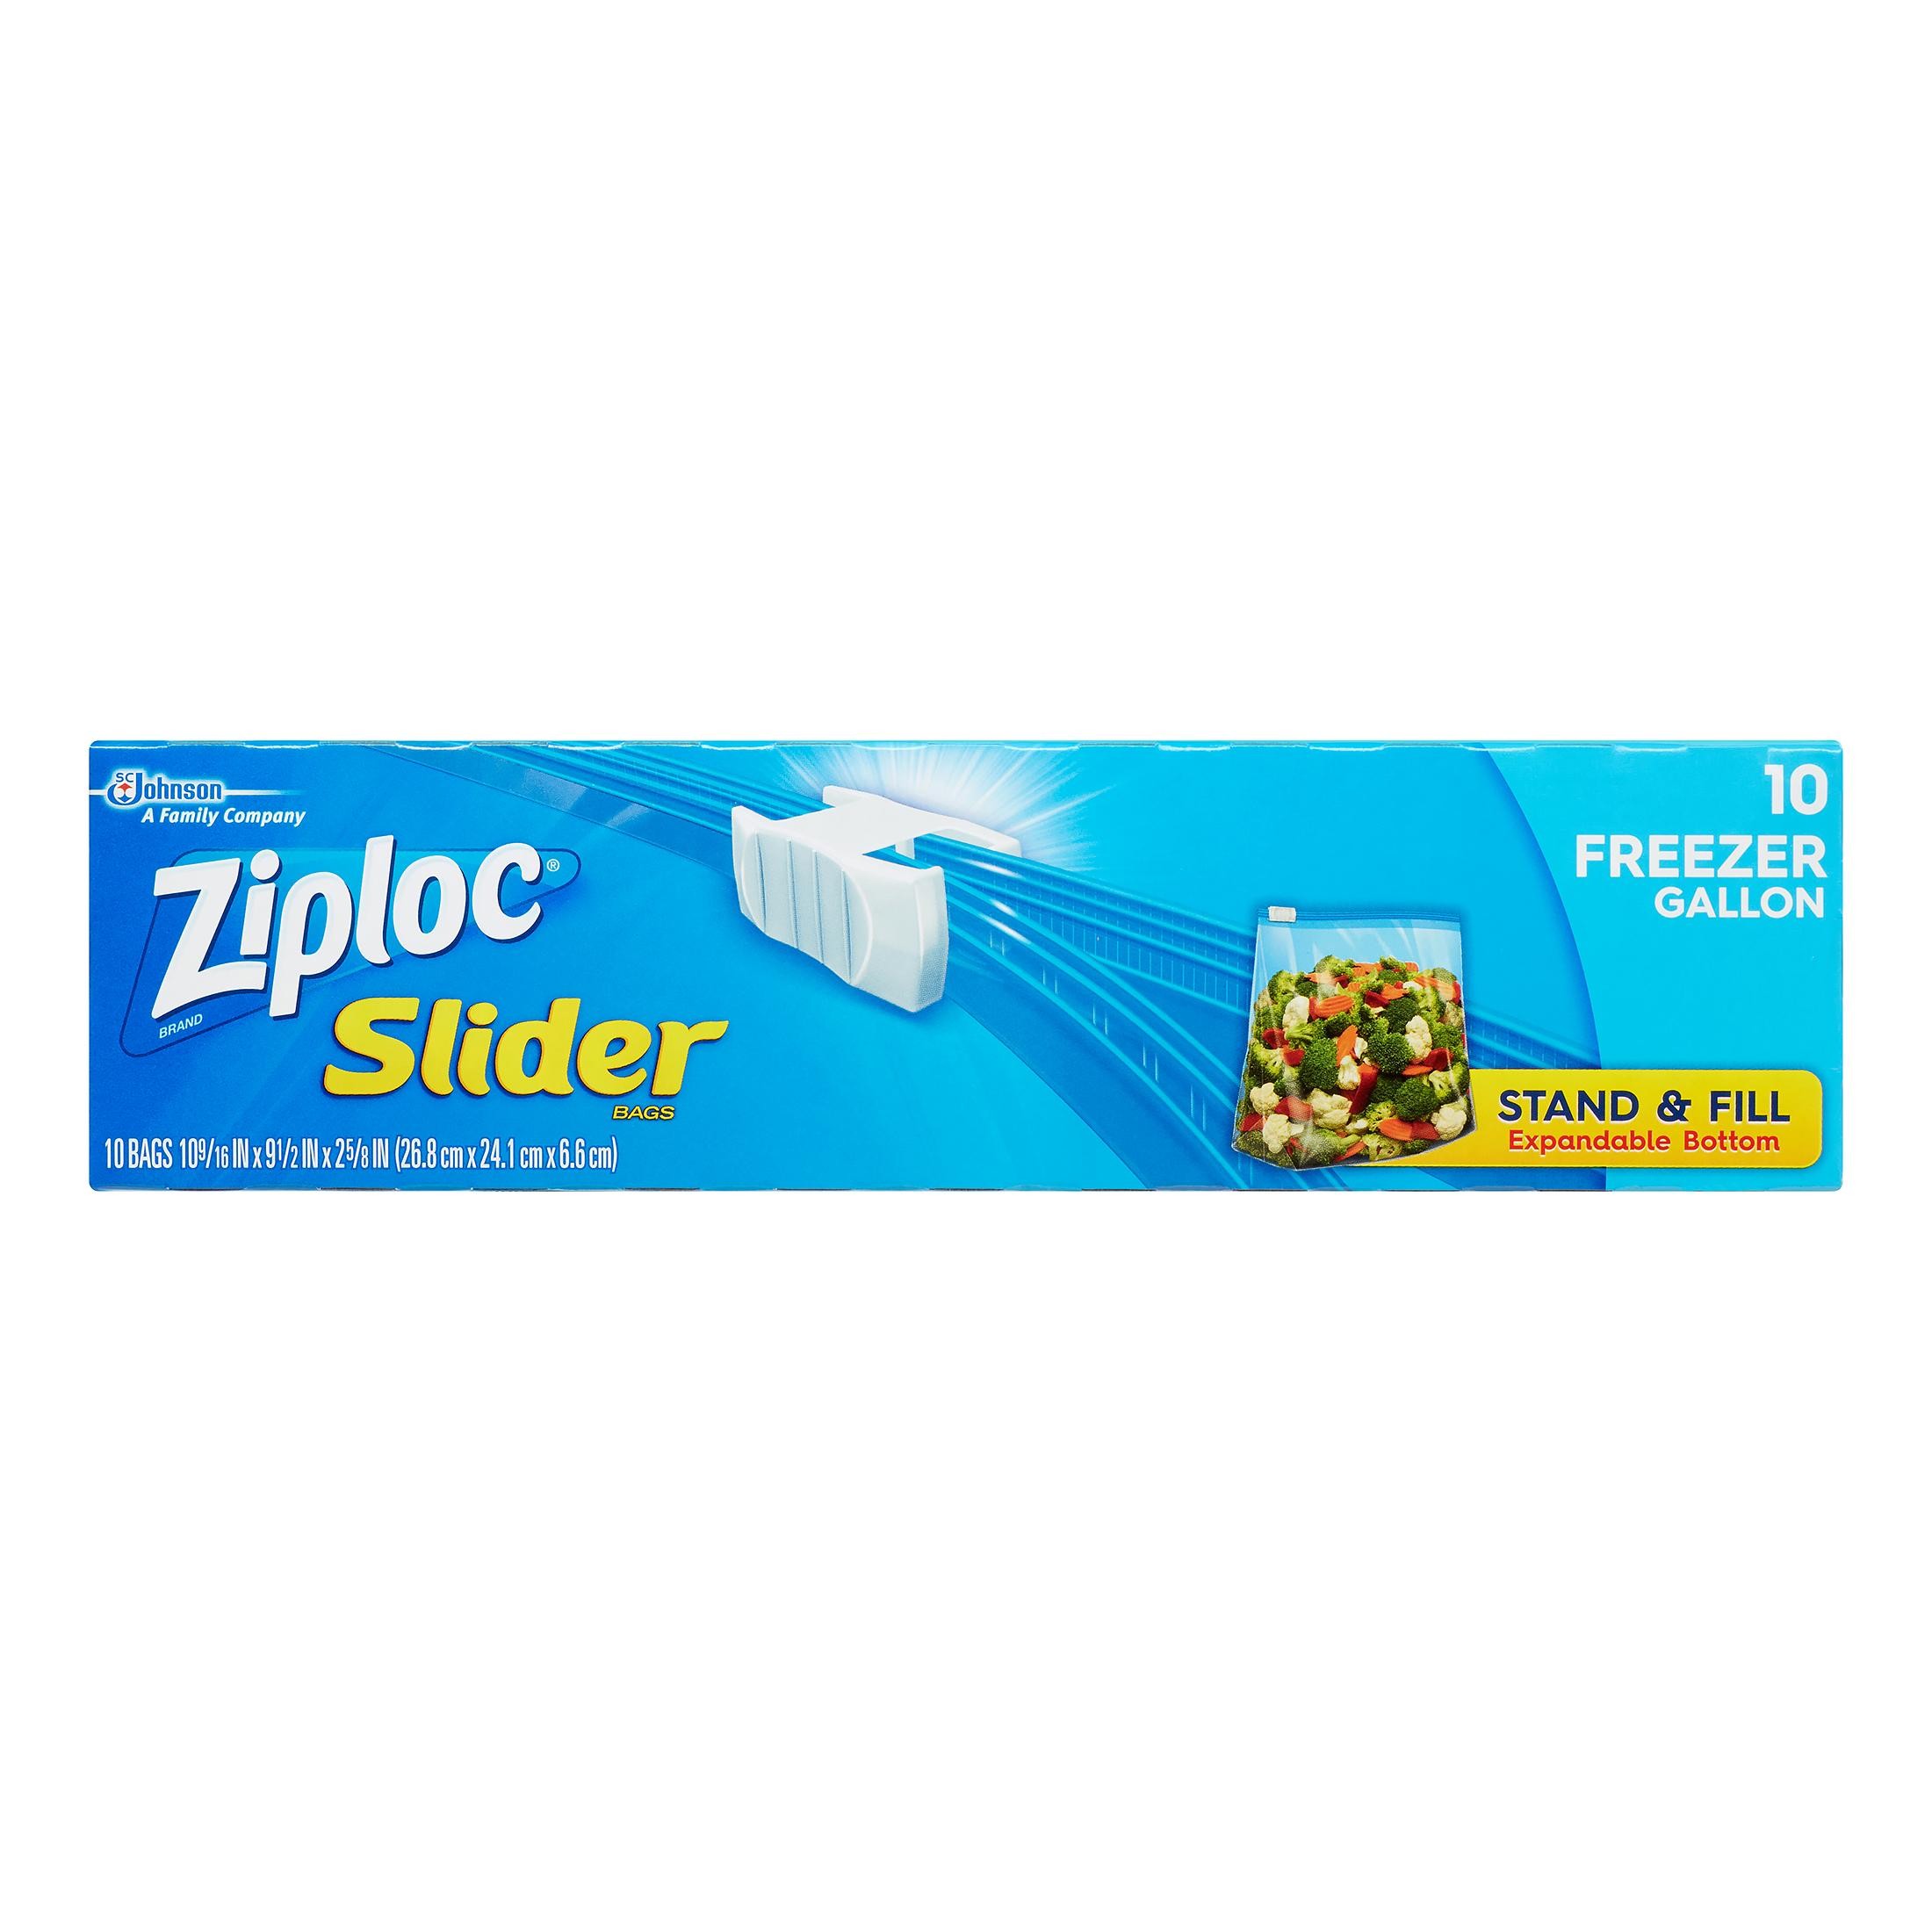 Ziploc® Brand Slider freezer bags